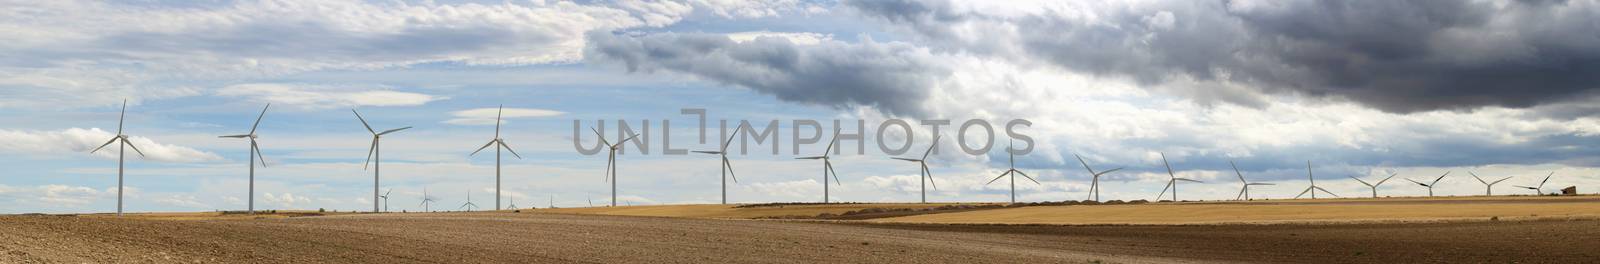 Wind generators panoramic image by deyan_georgiev